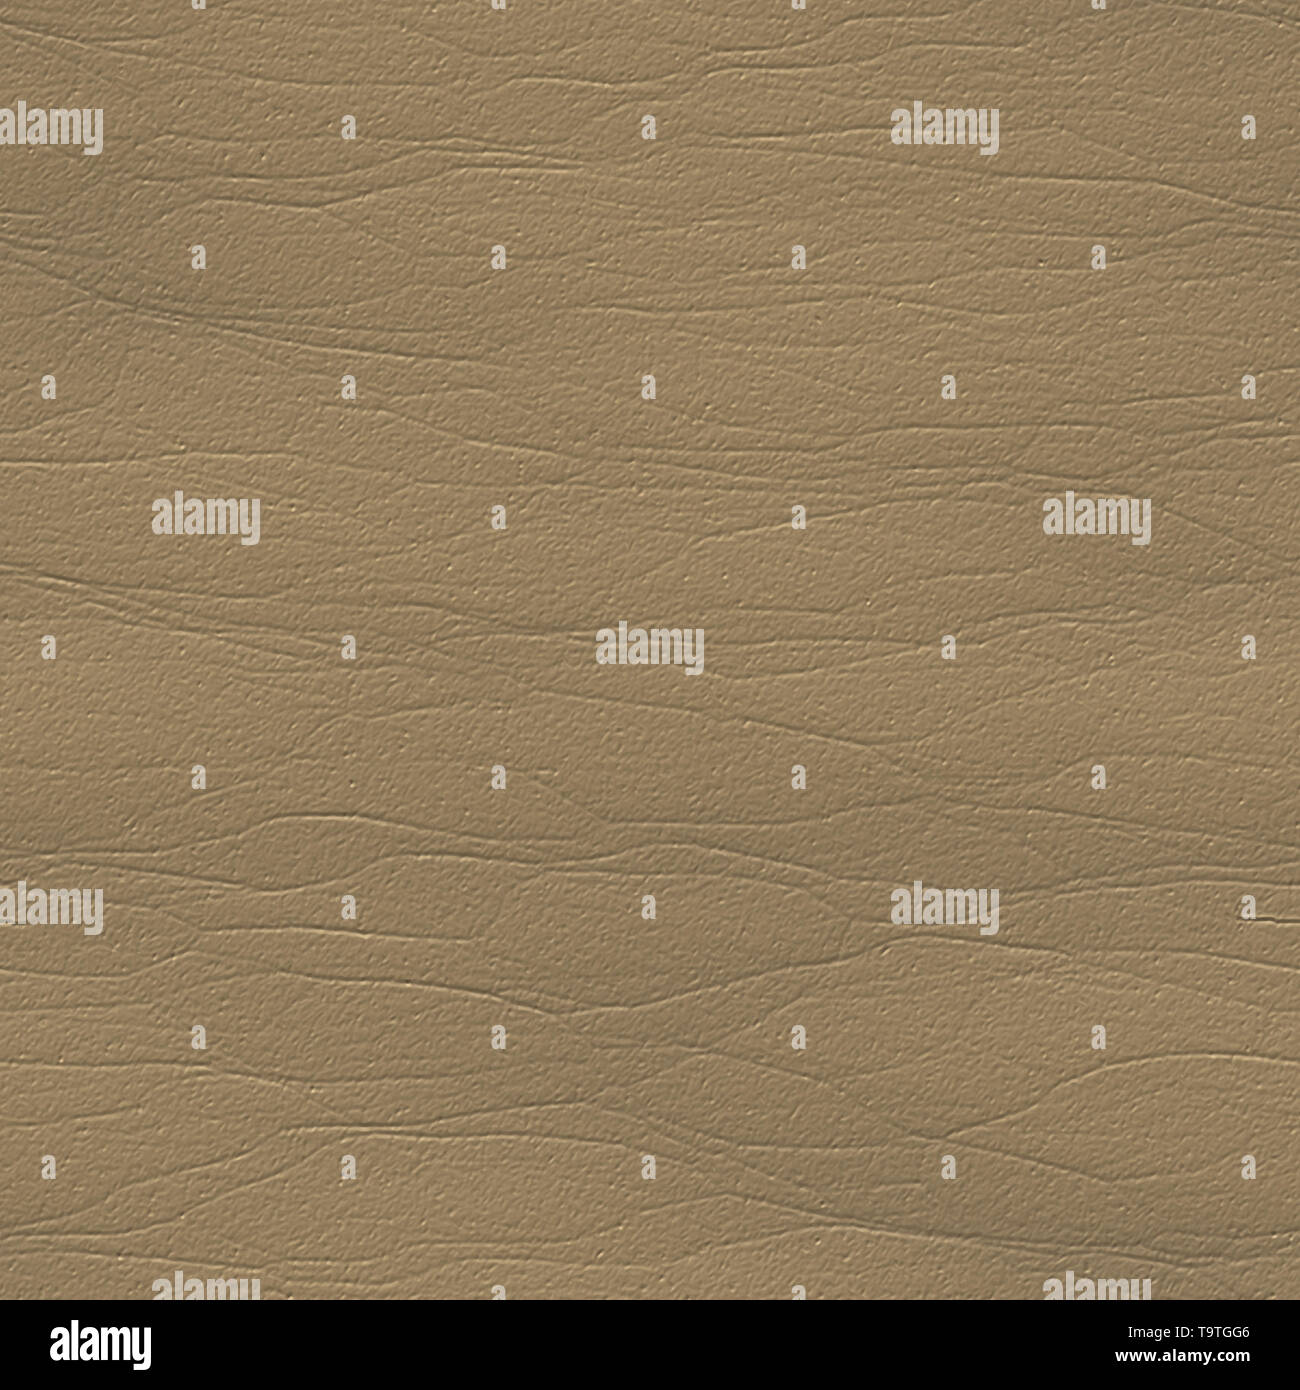 Leather Seamless Texture Tile Stock Photo